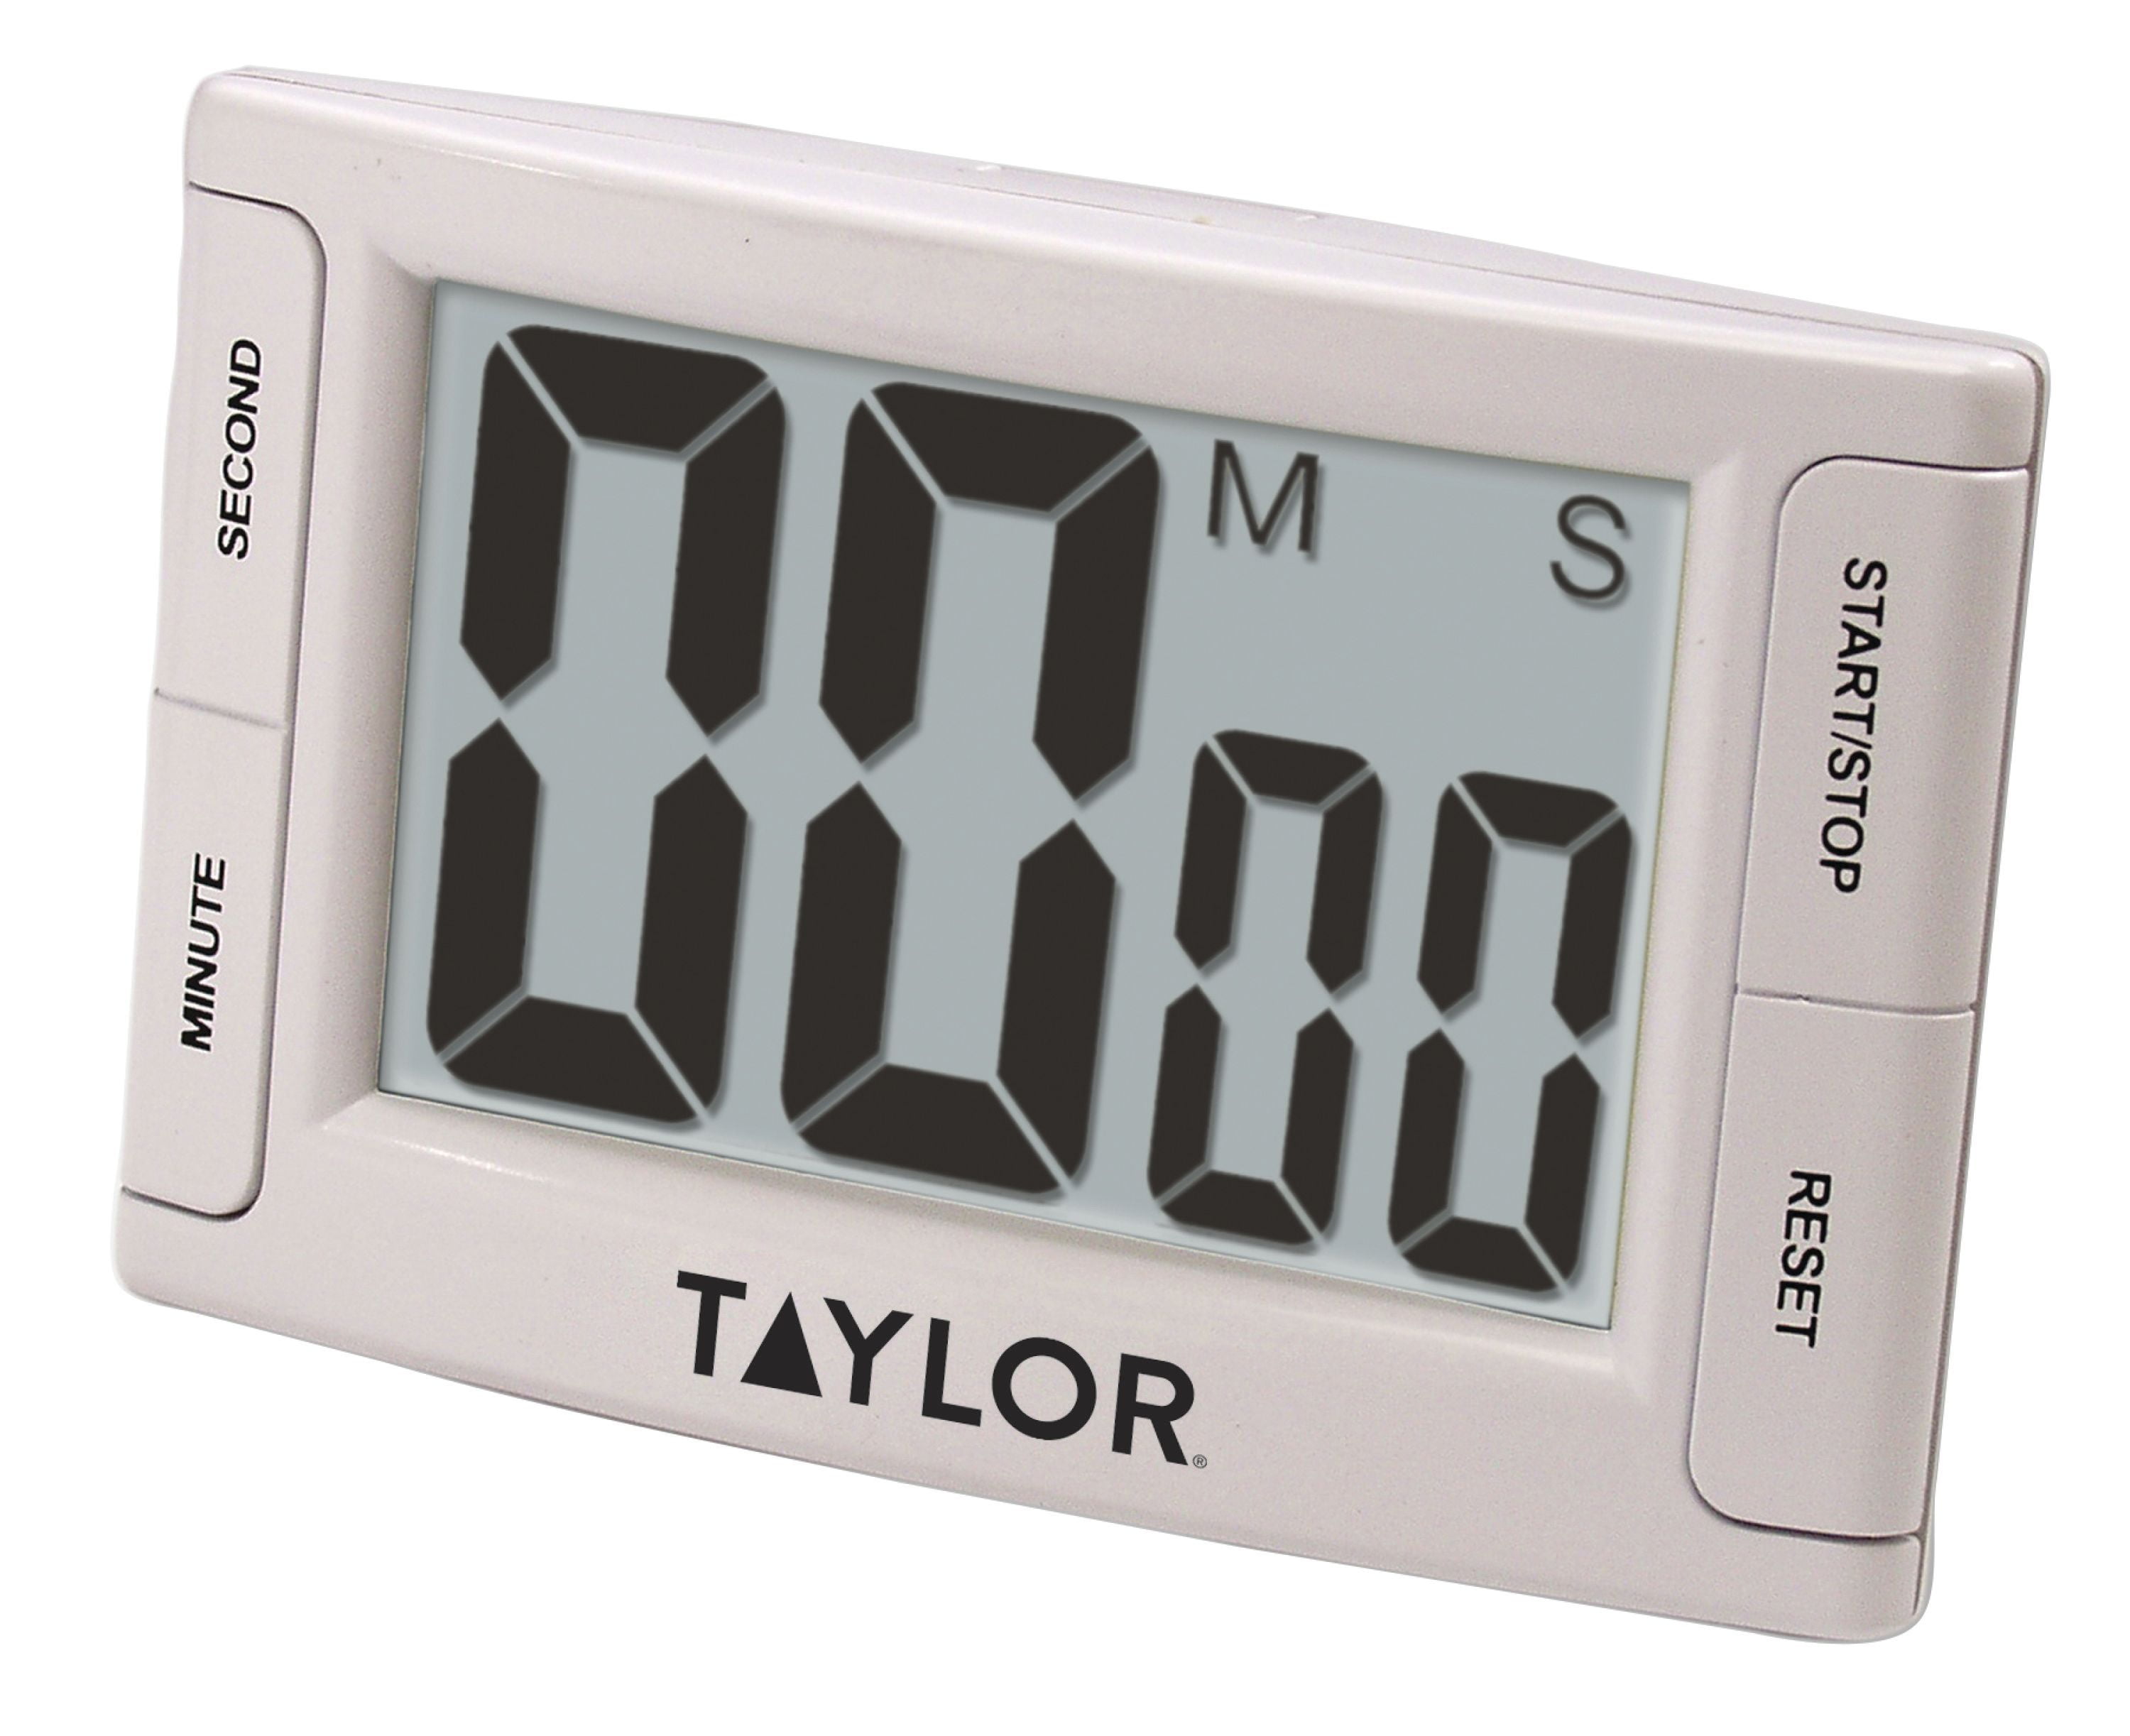 Taylor Super Loud (95Db) Digital Timer White